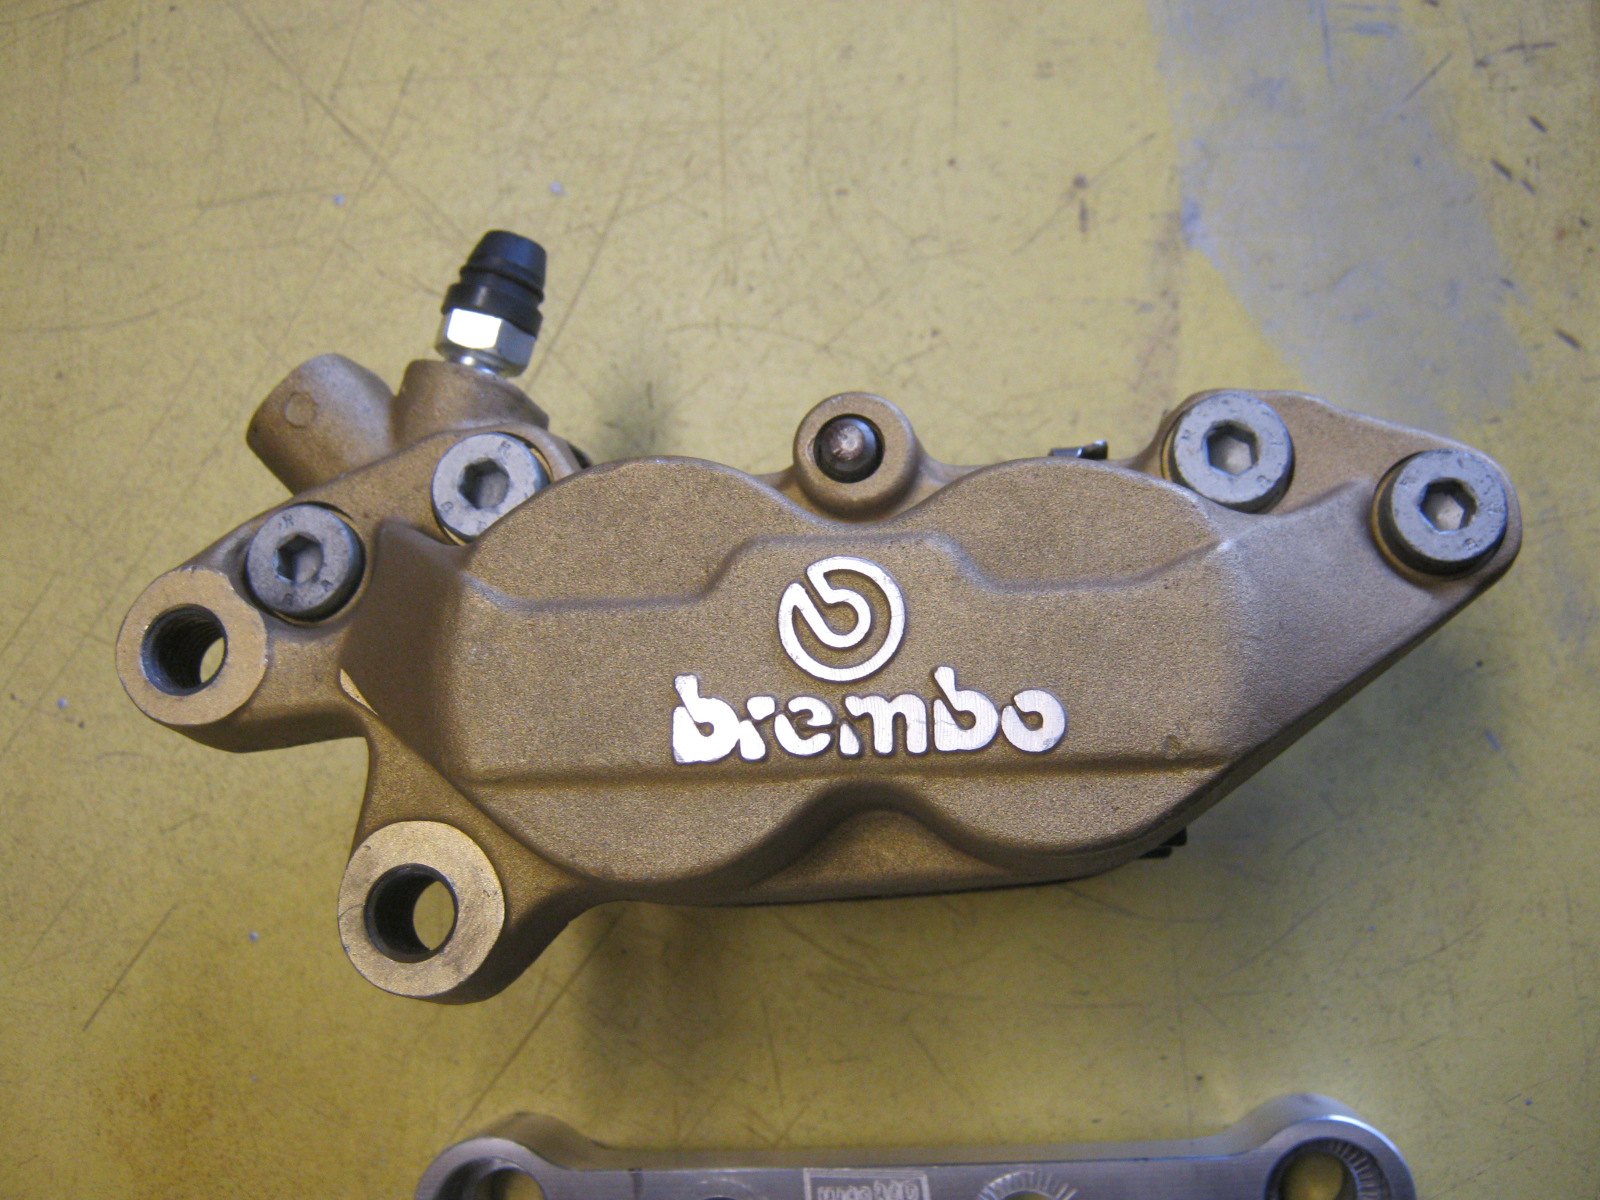 Disc brake configuration using 4 piston calipers. Applicable to Moto Guzzi V700, V7 Special, Ambassador, 850 GT, 850 GT California, Eldorado, and 850 California Police models.